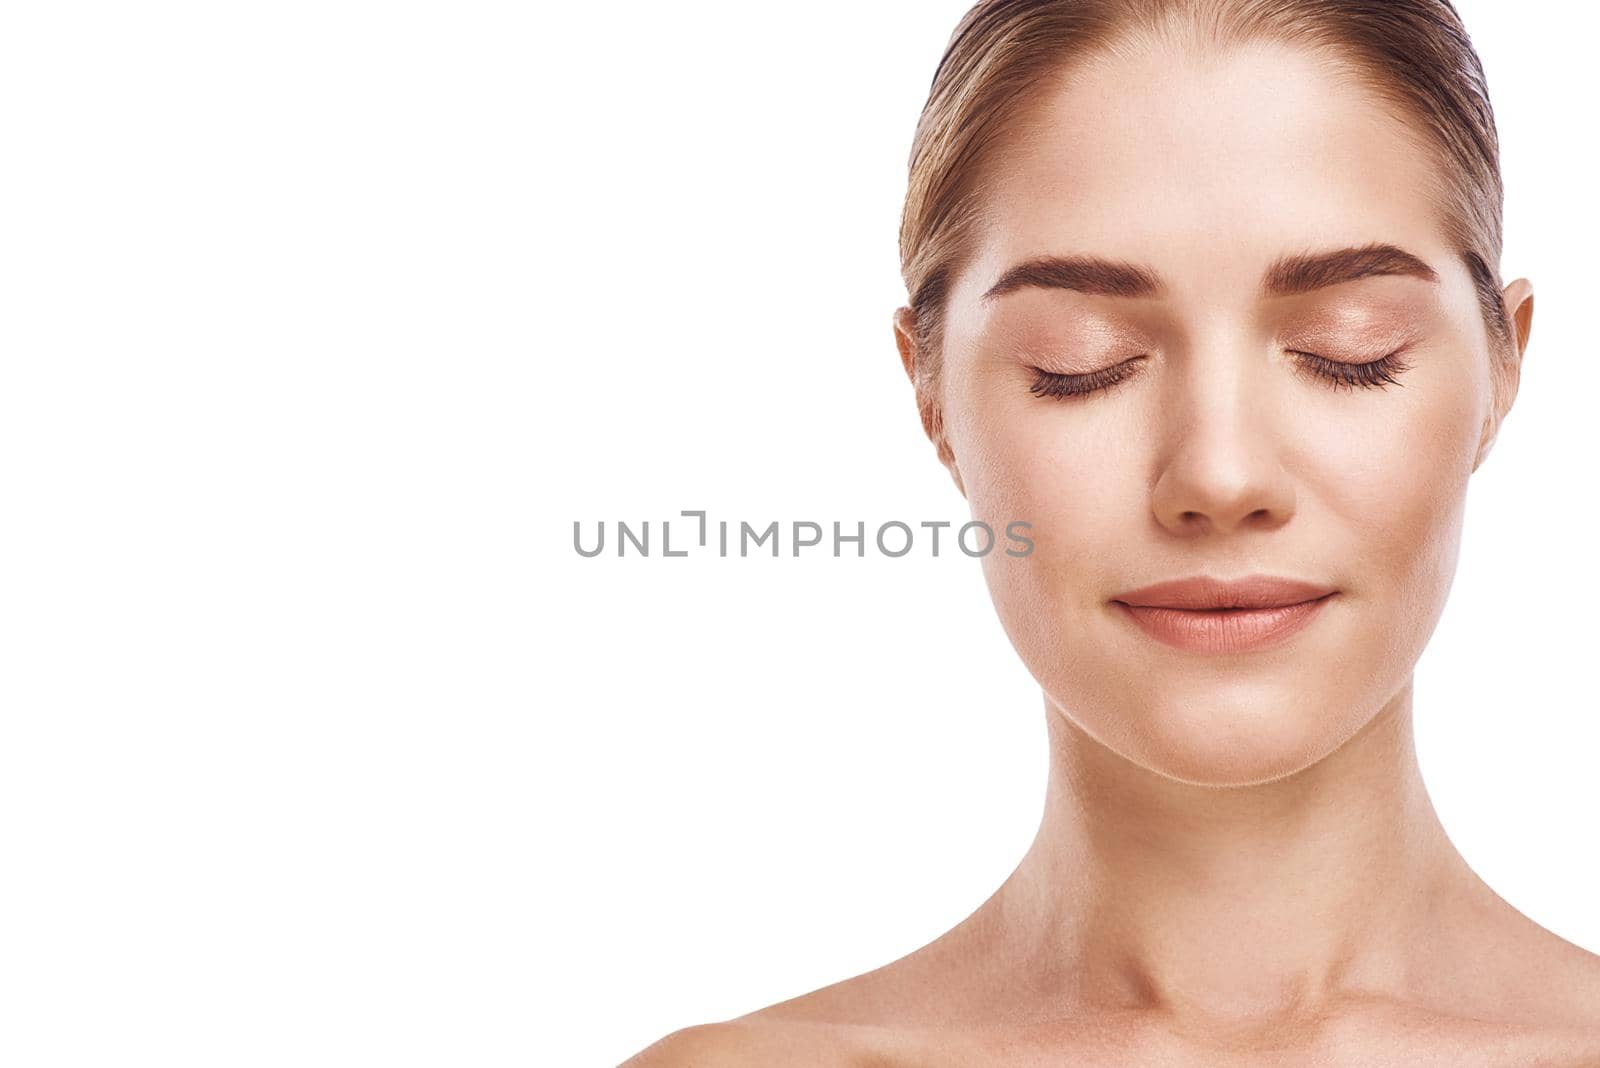 Beautiful woman face close up studio photo on white background. Light hair, grey eyes, closed eyes